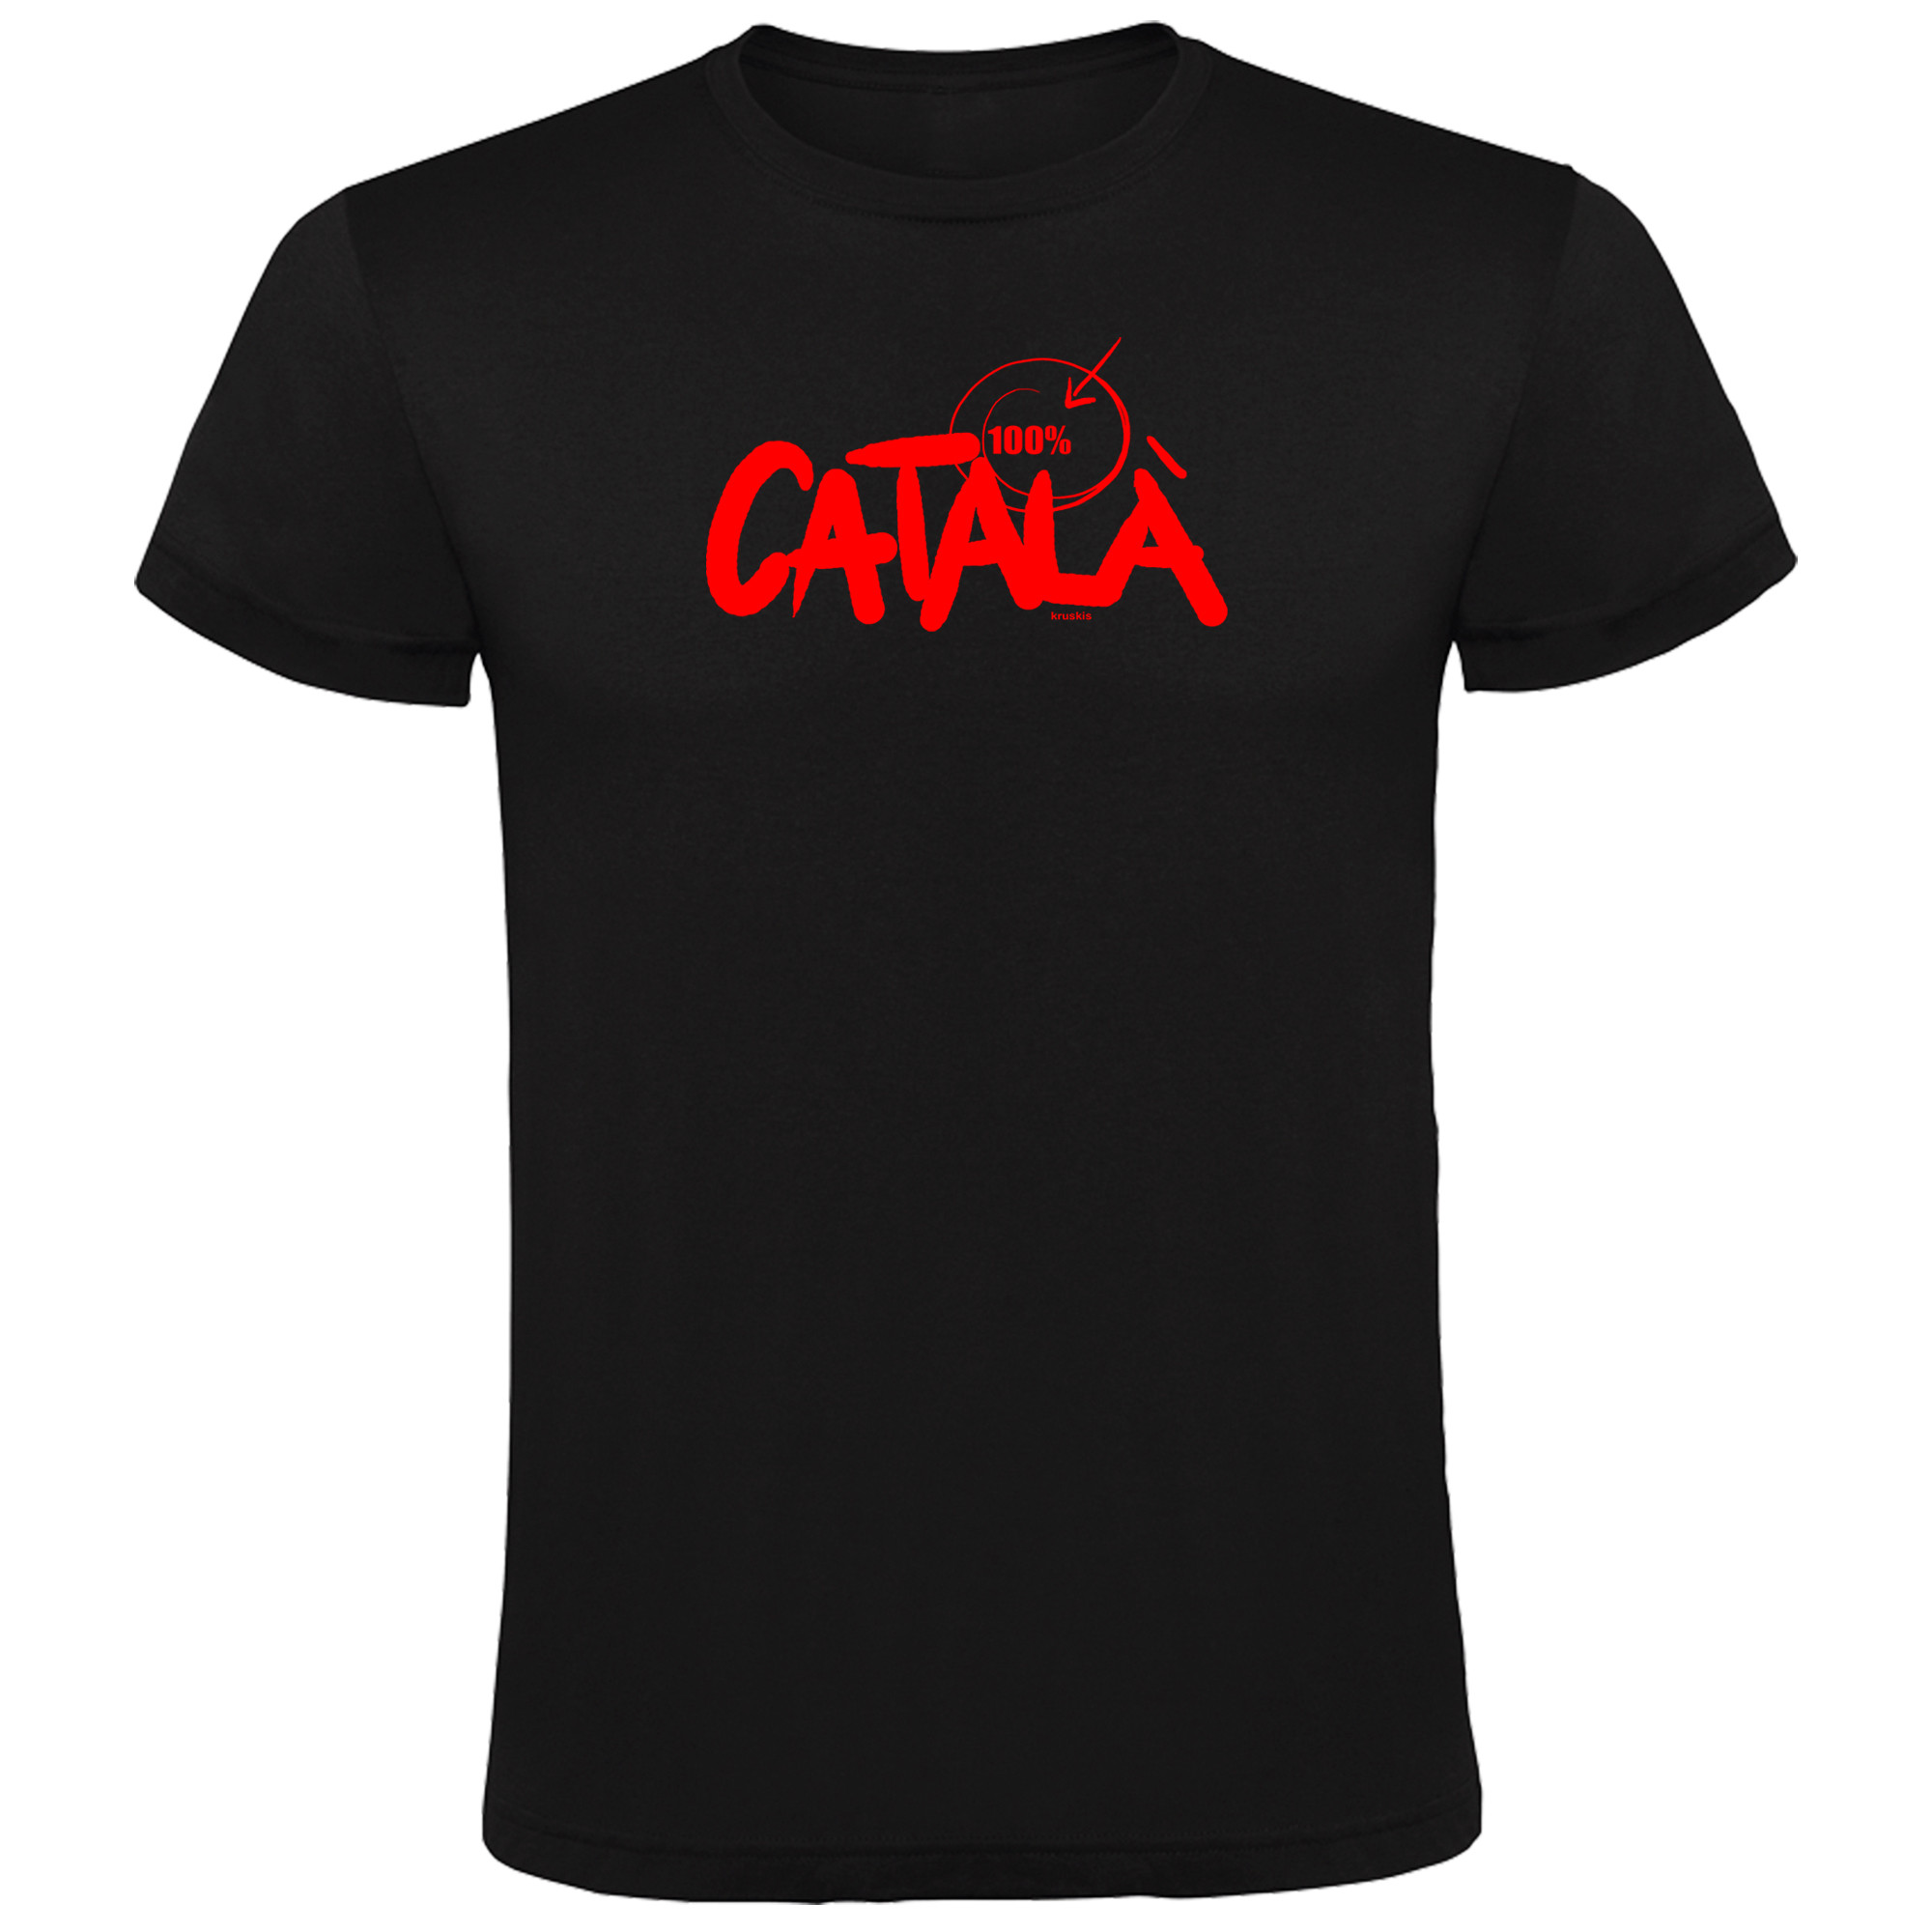 Camiseta Catalunya 100% Catala Manga Corta Hombre